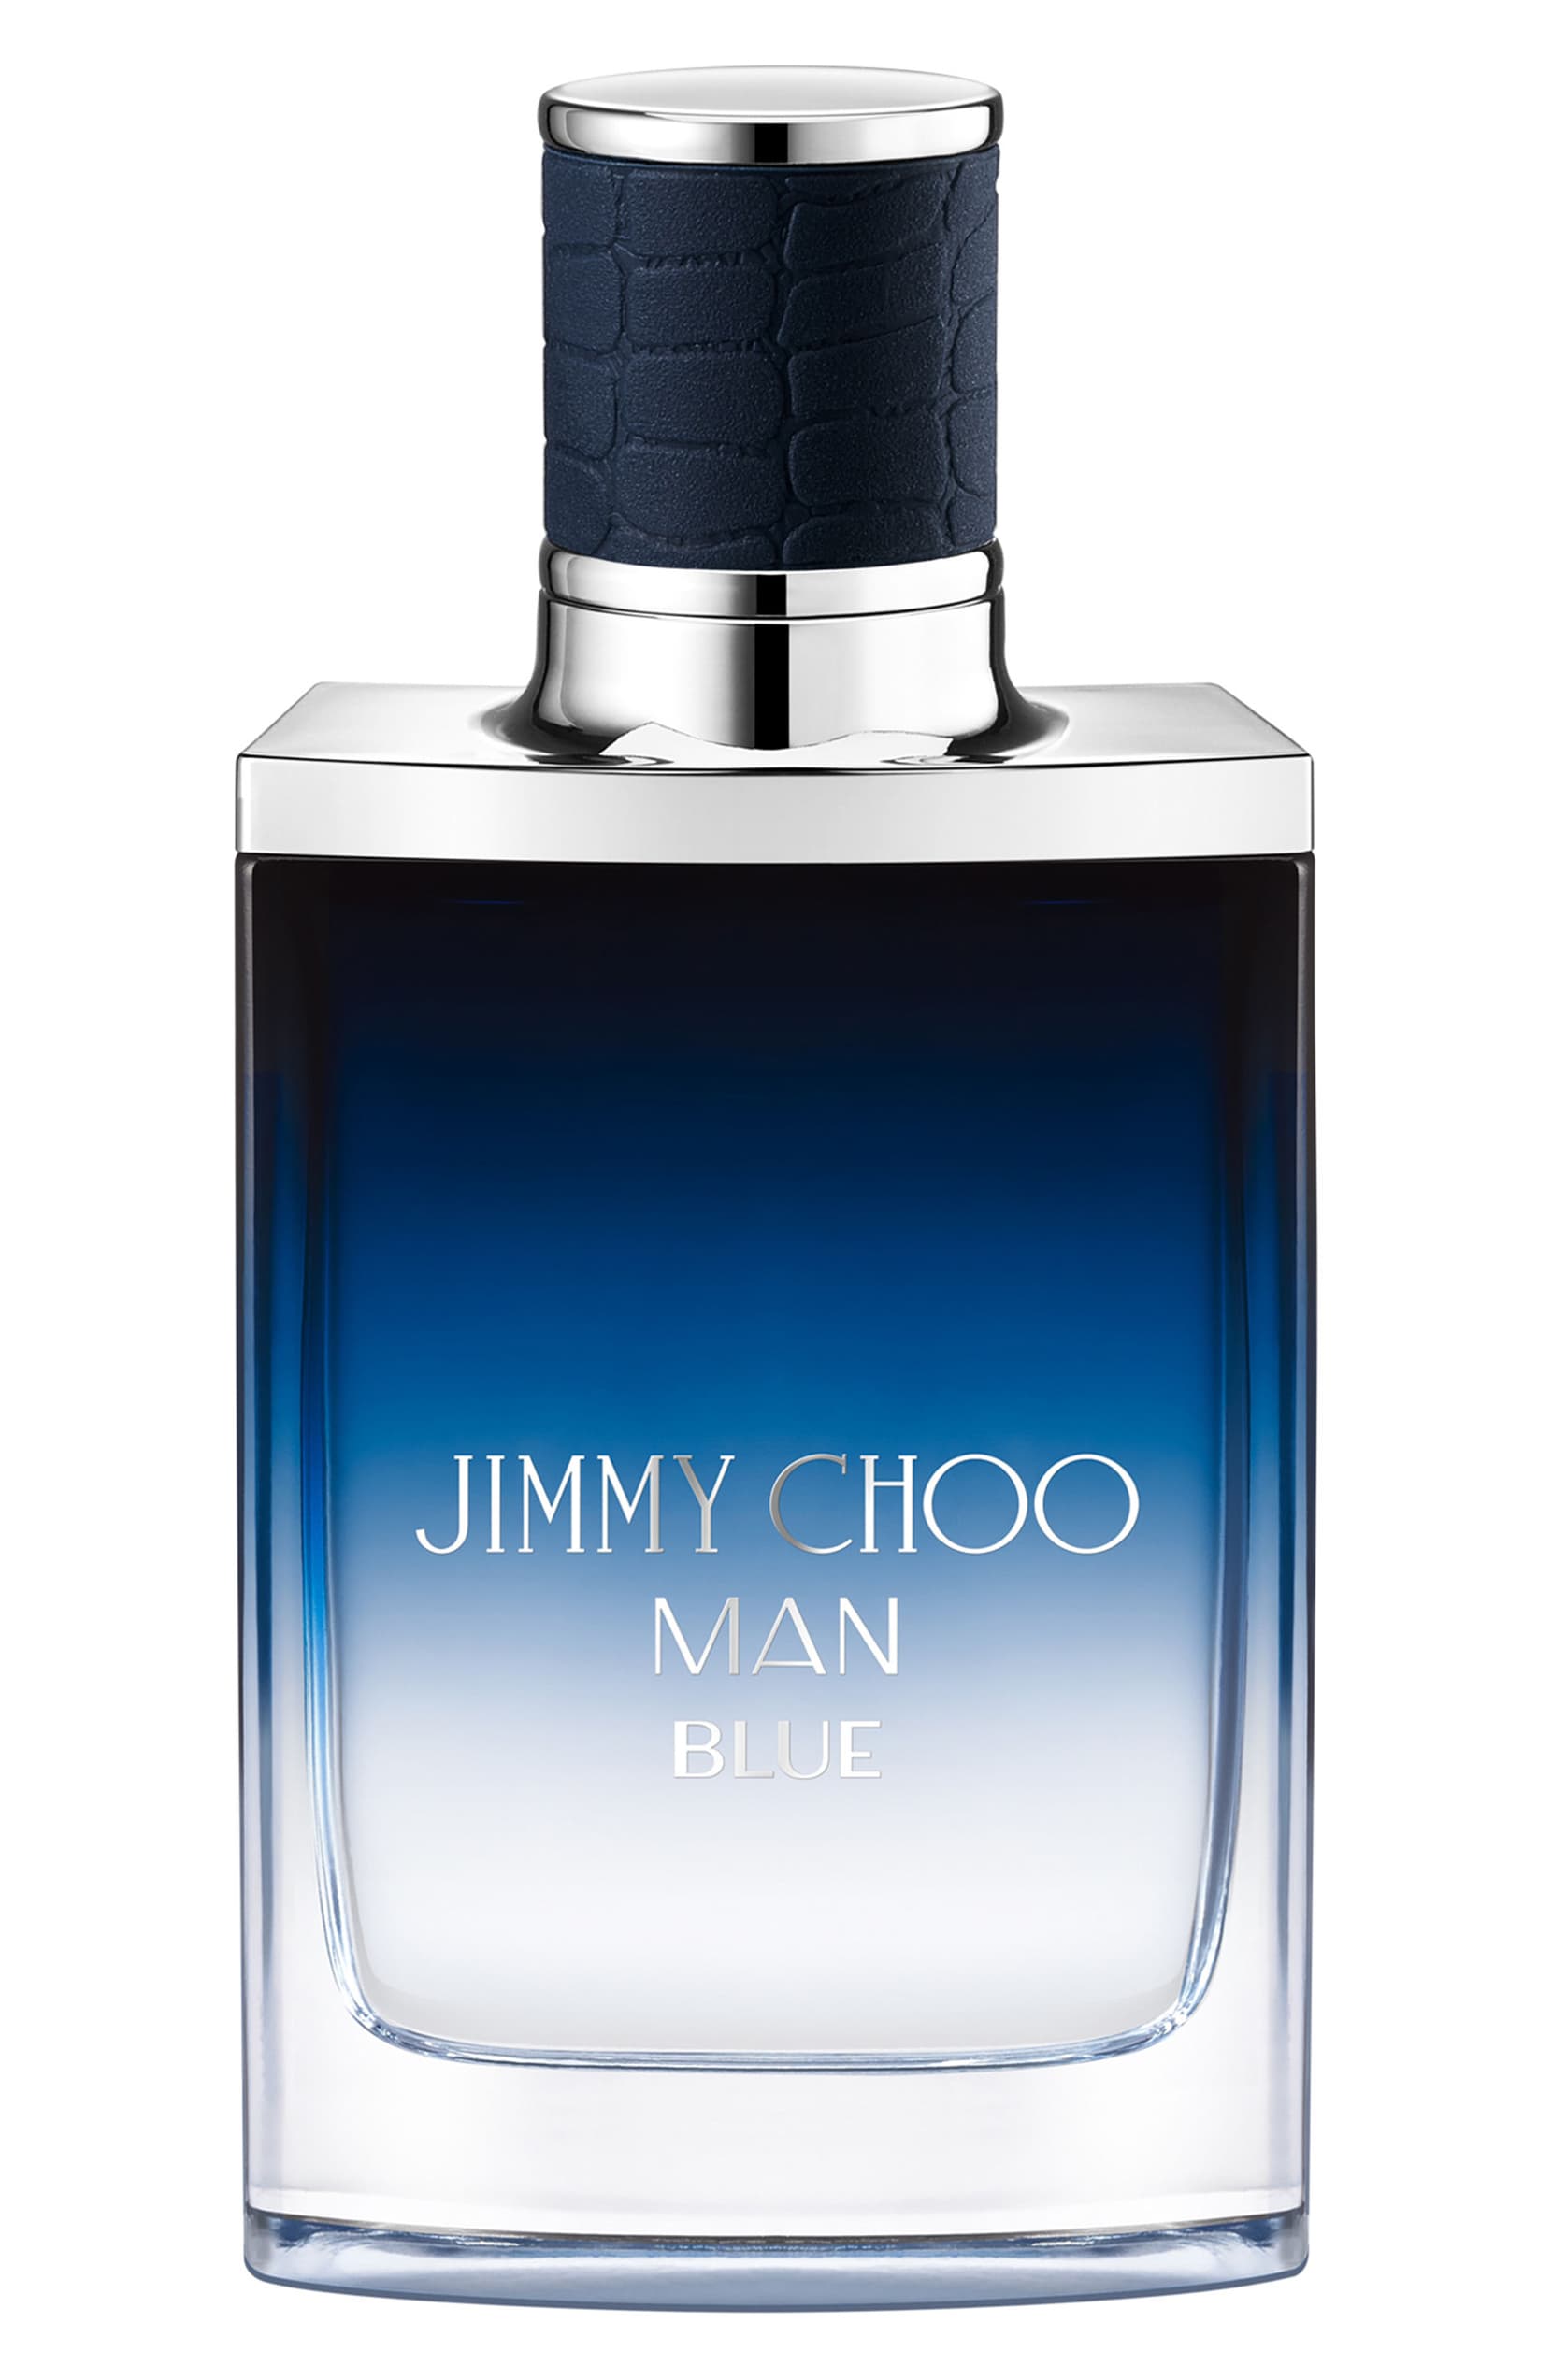 Mens Man Blue / Jimmy Choo EDT Spray 1.7 oz (50 ml) (m) from Jimmy Choo, UPC: 3386460072588